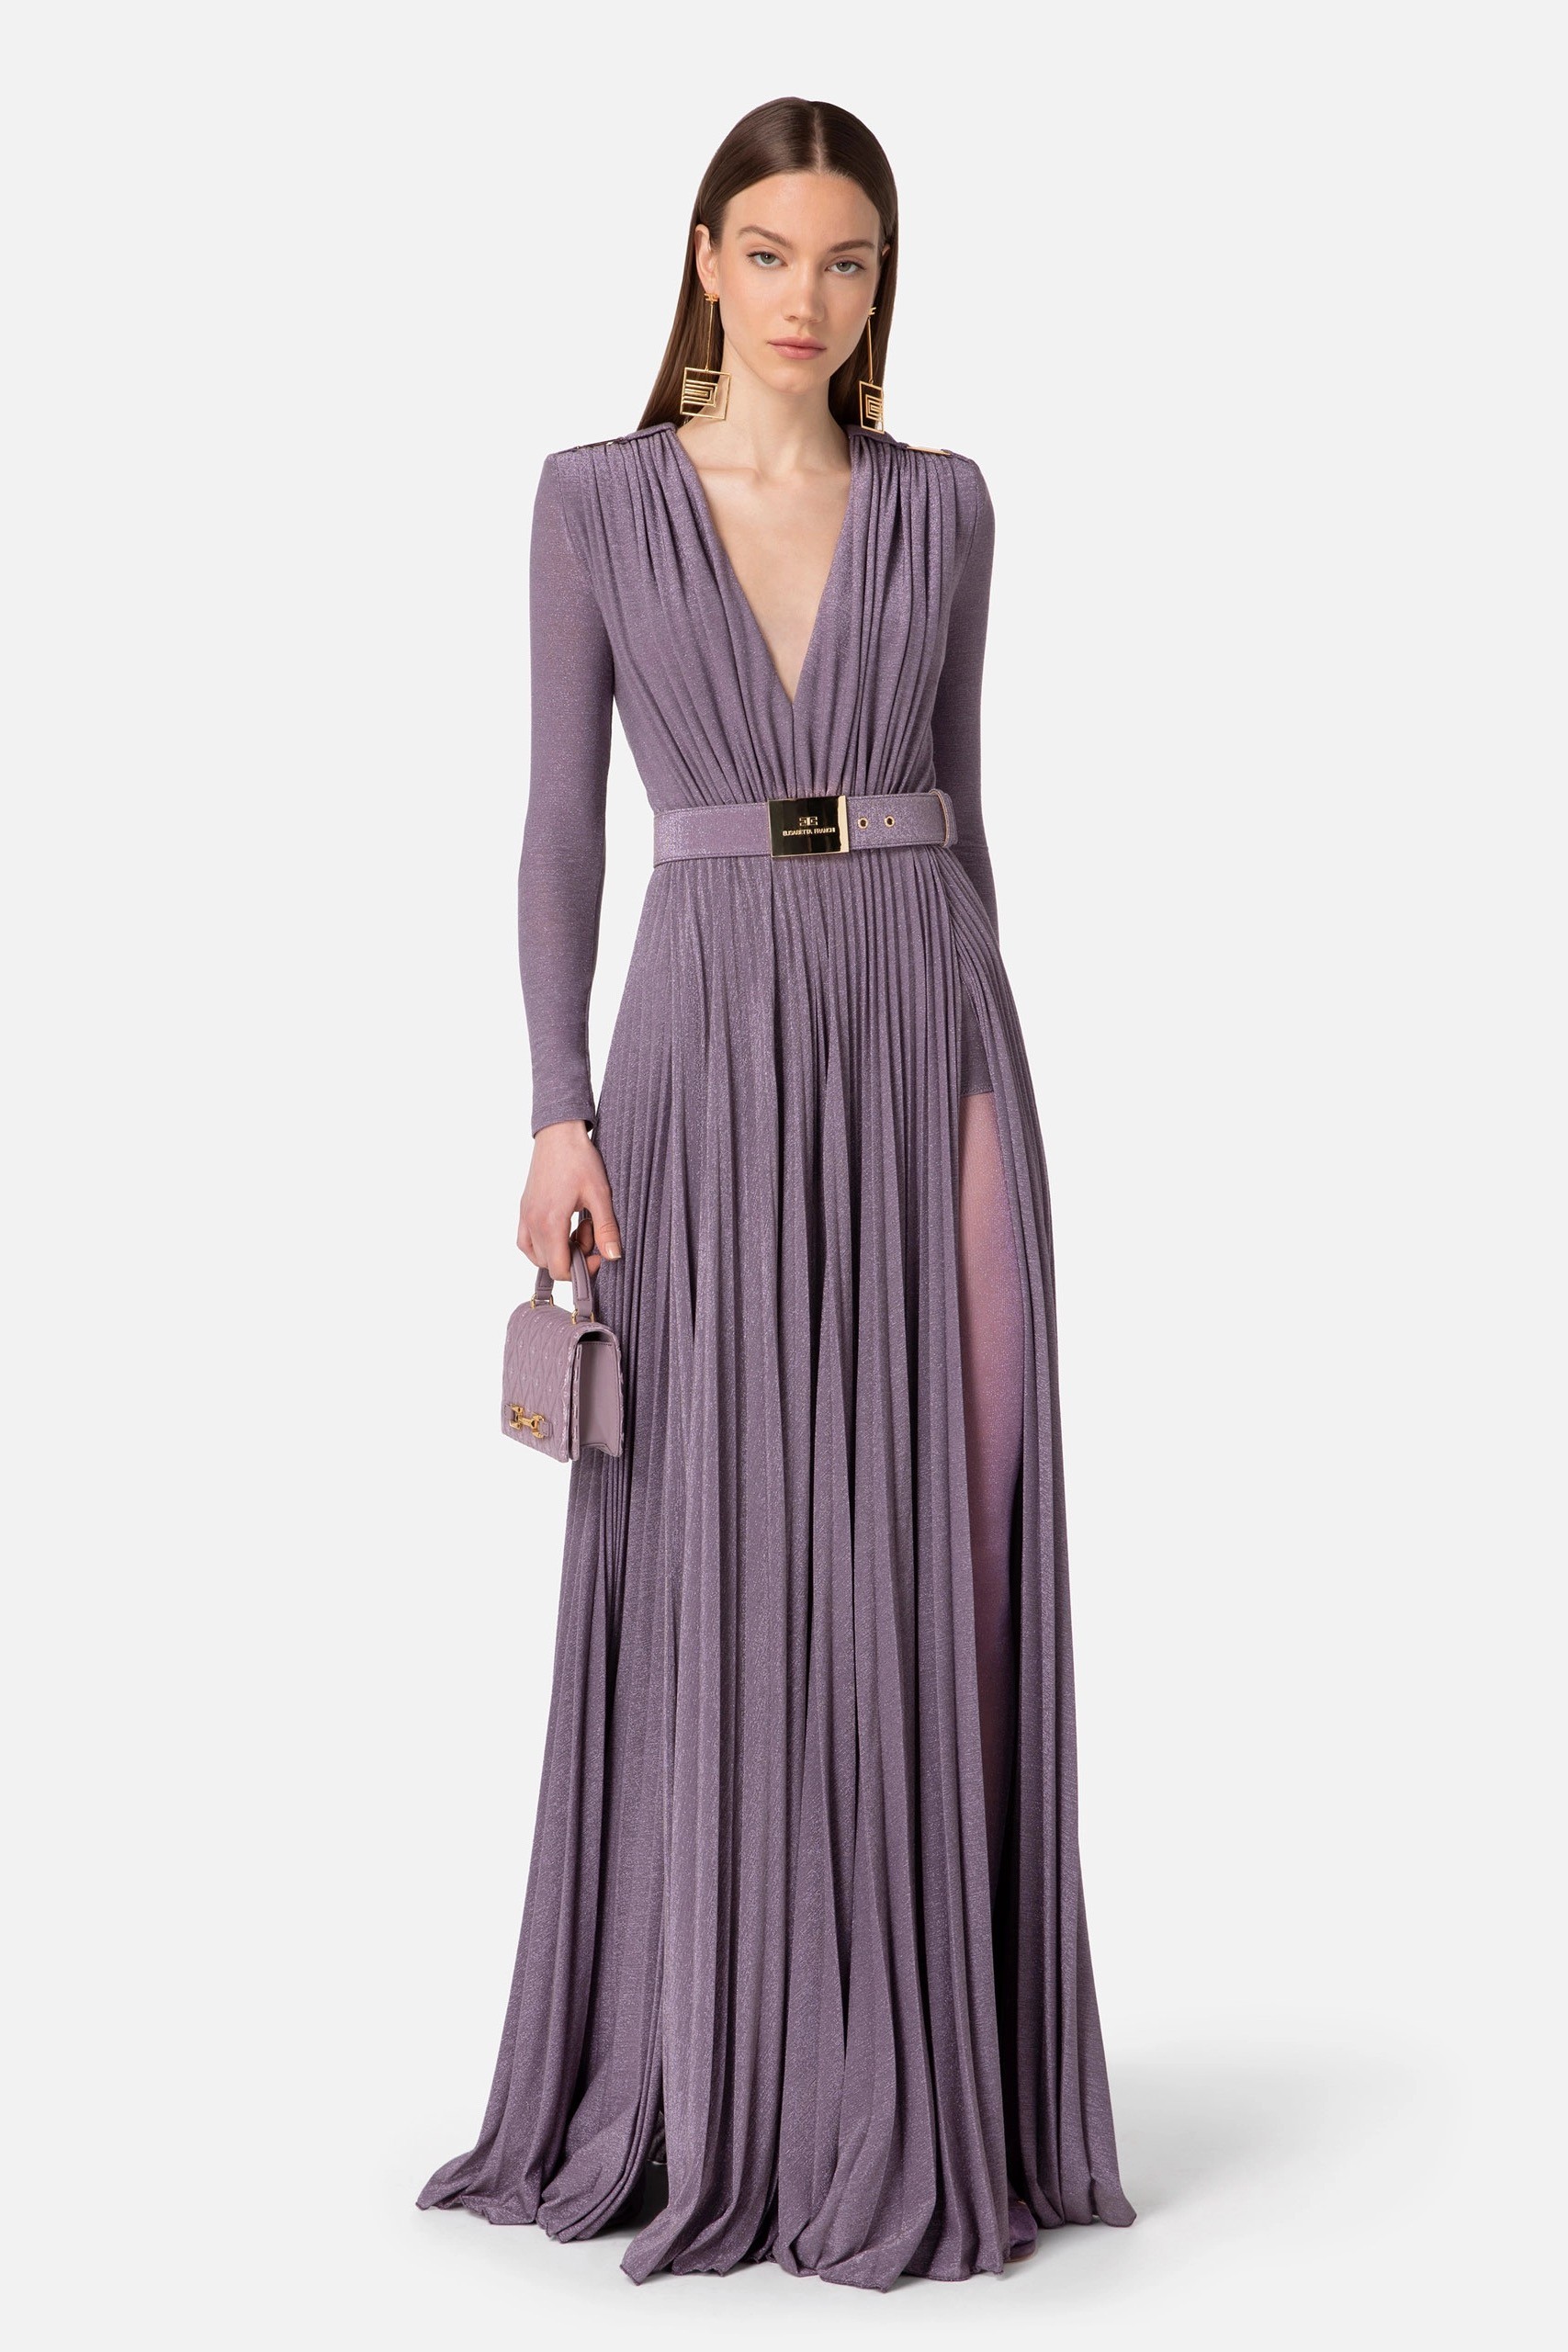 Elisabetta Franchi - Red Carpet lurex jersey dress - Candy Violet